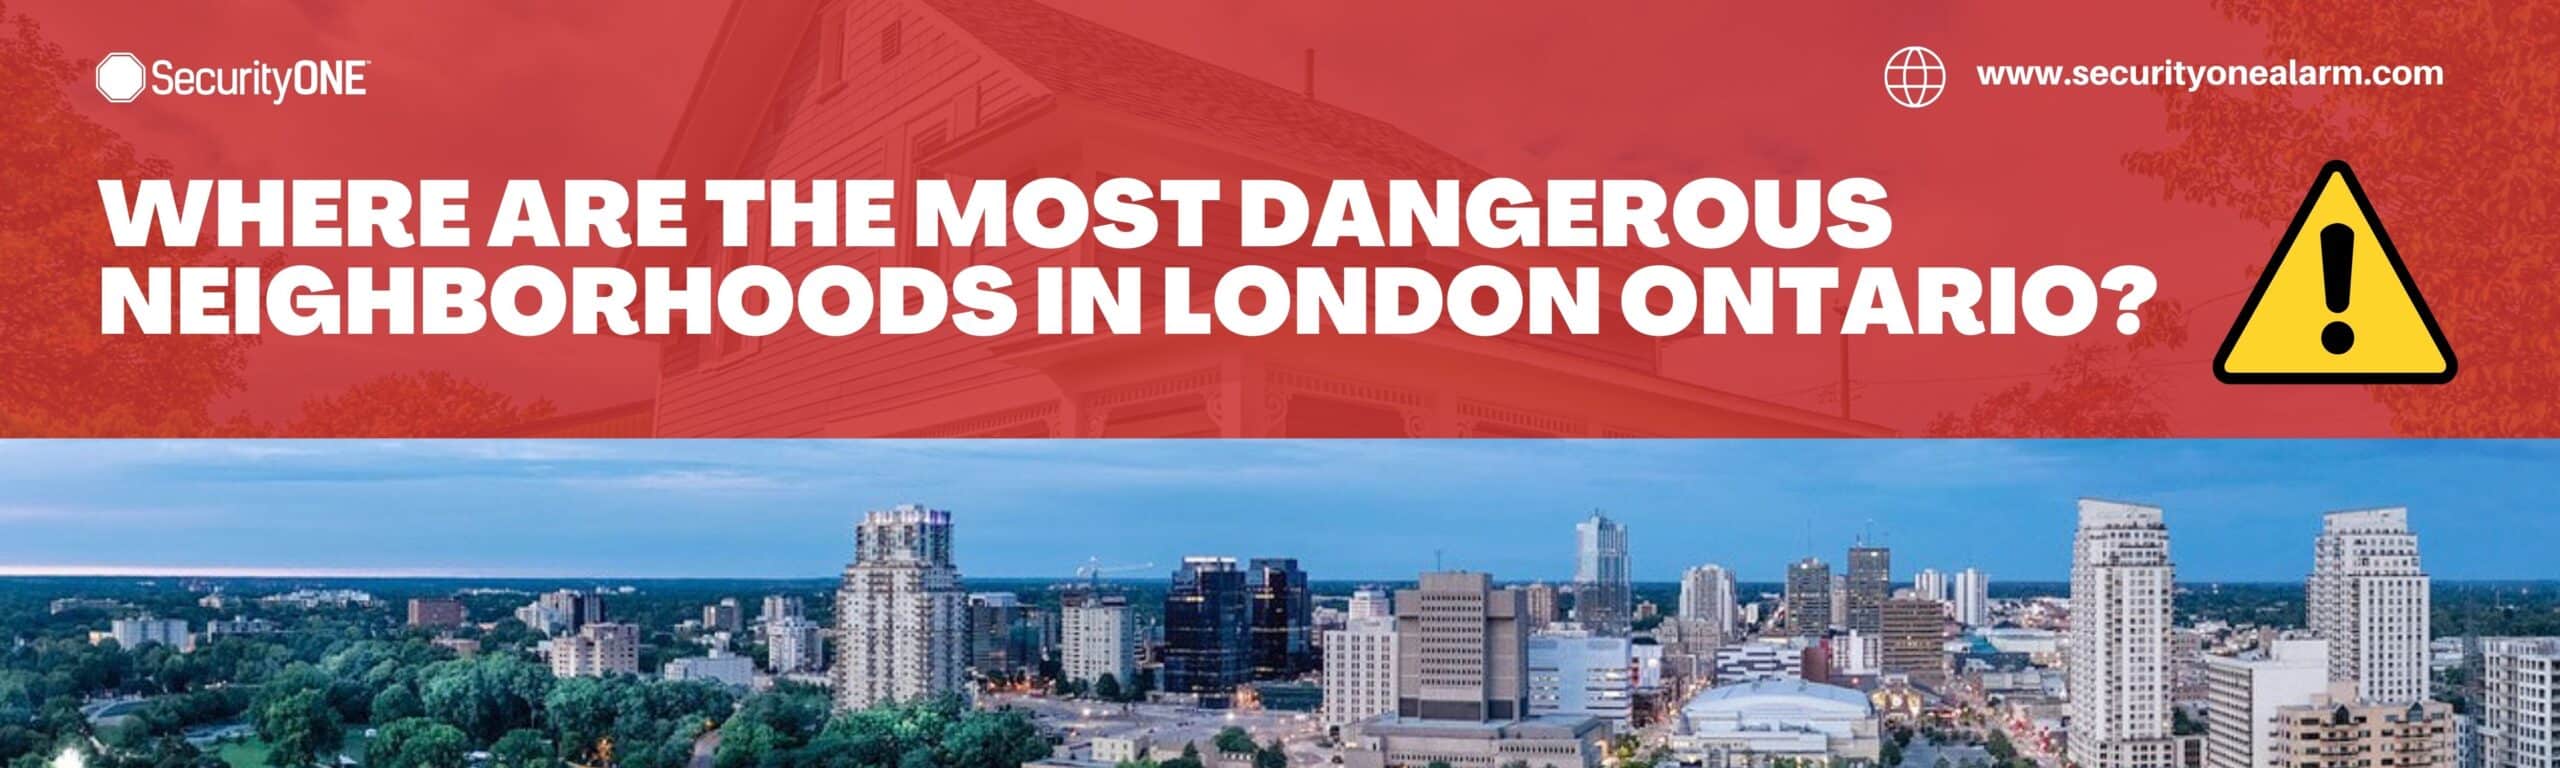 DANGEROUS AREA IN LONDON ON SECURITY